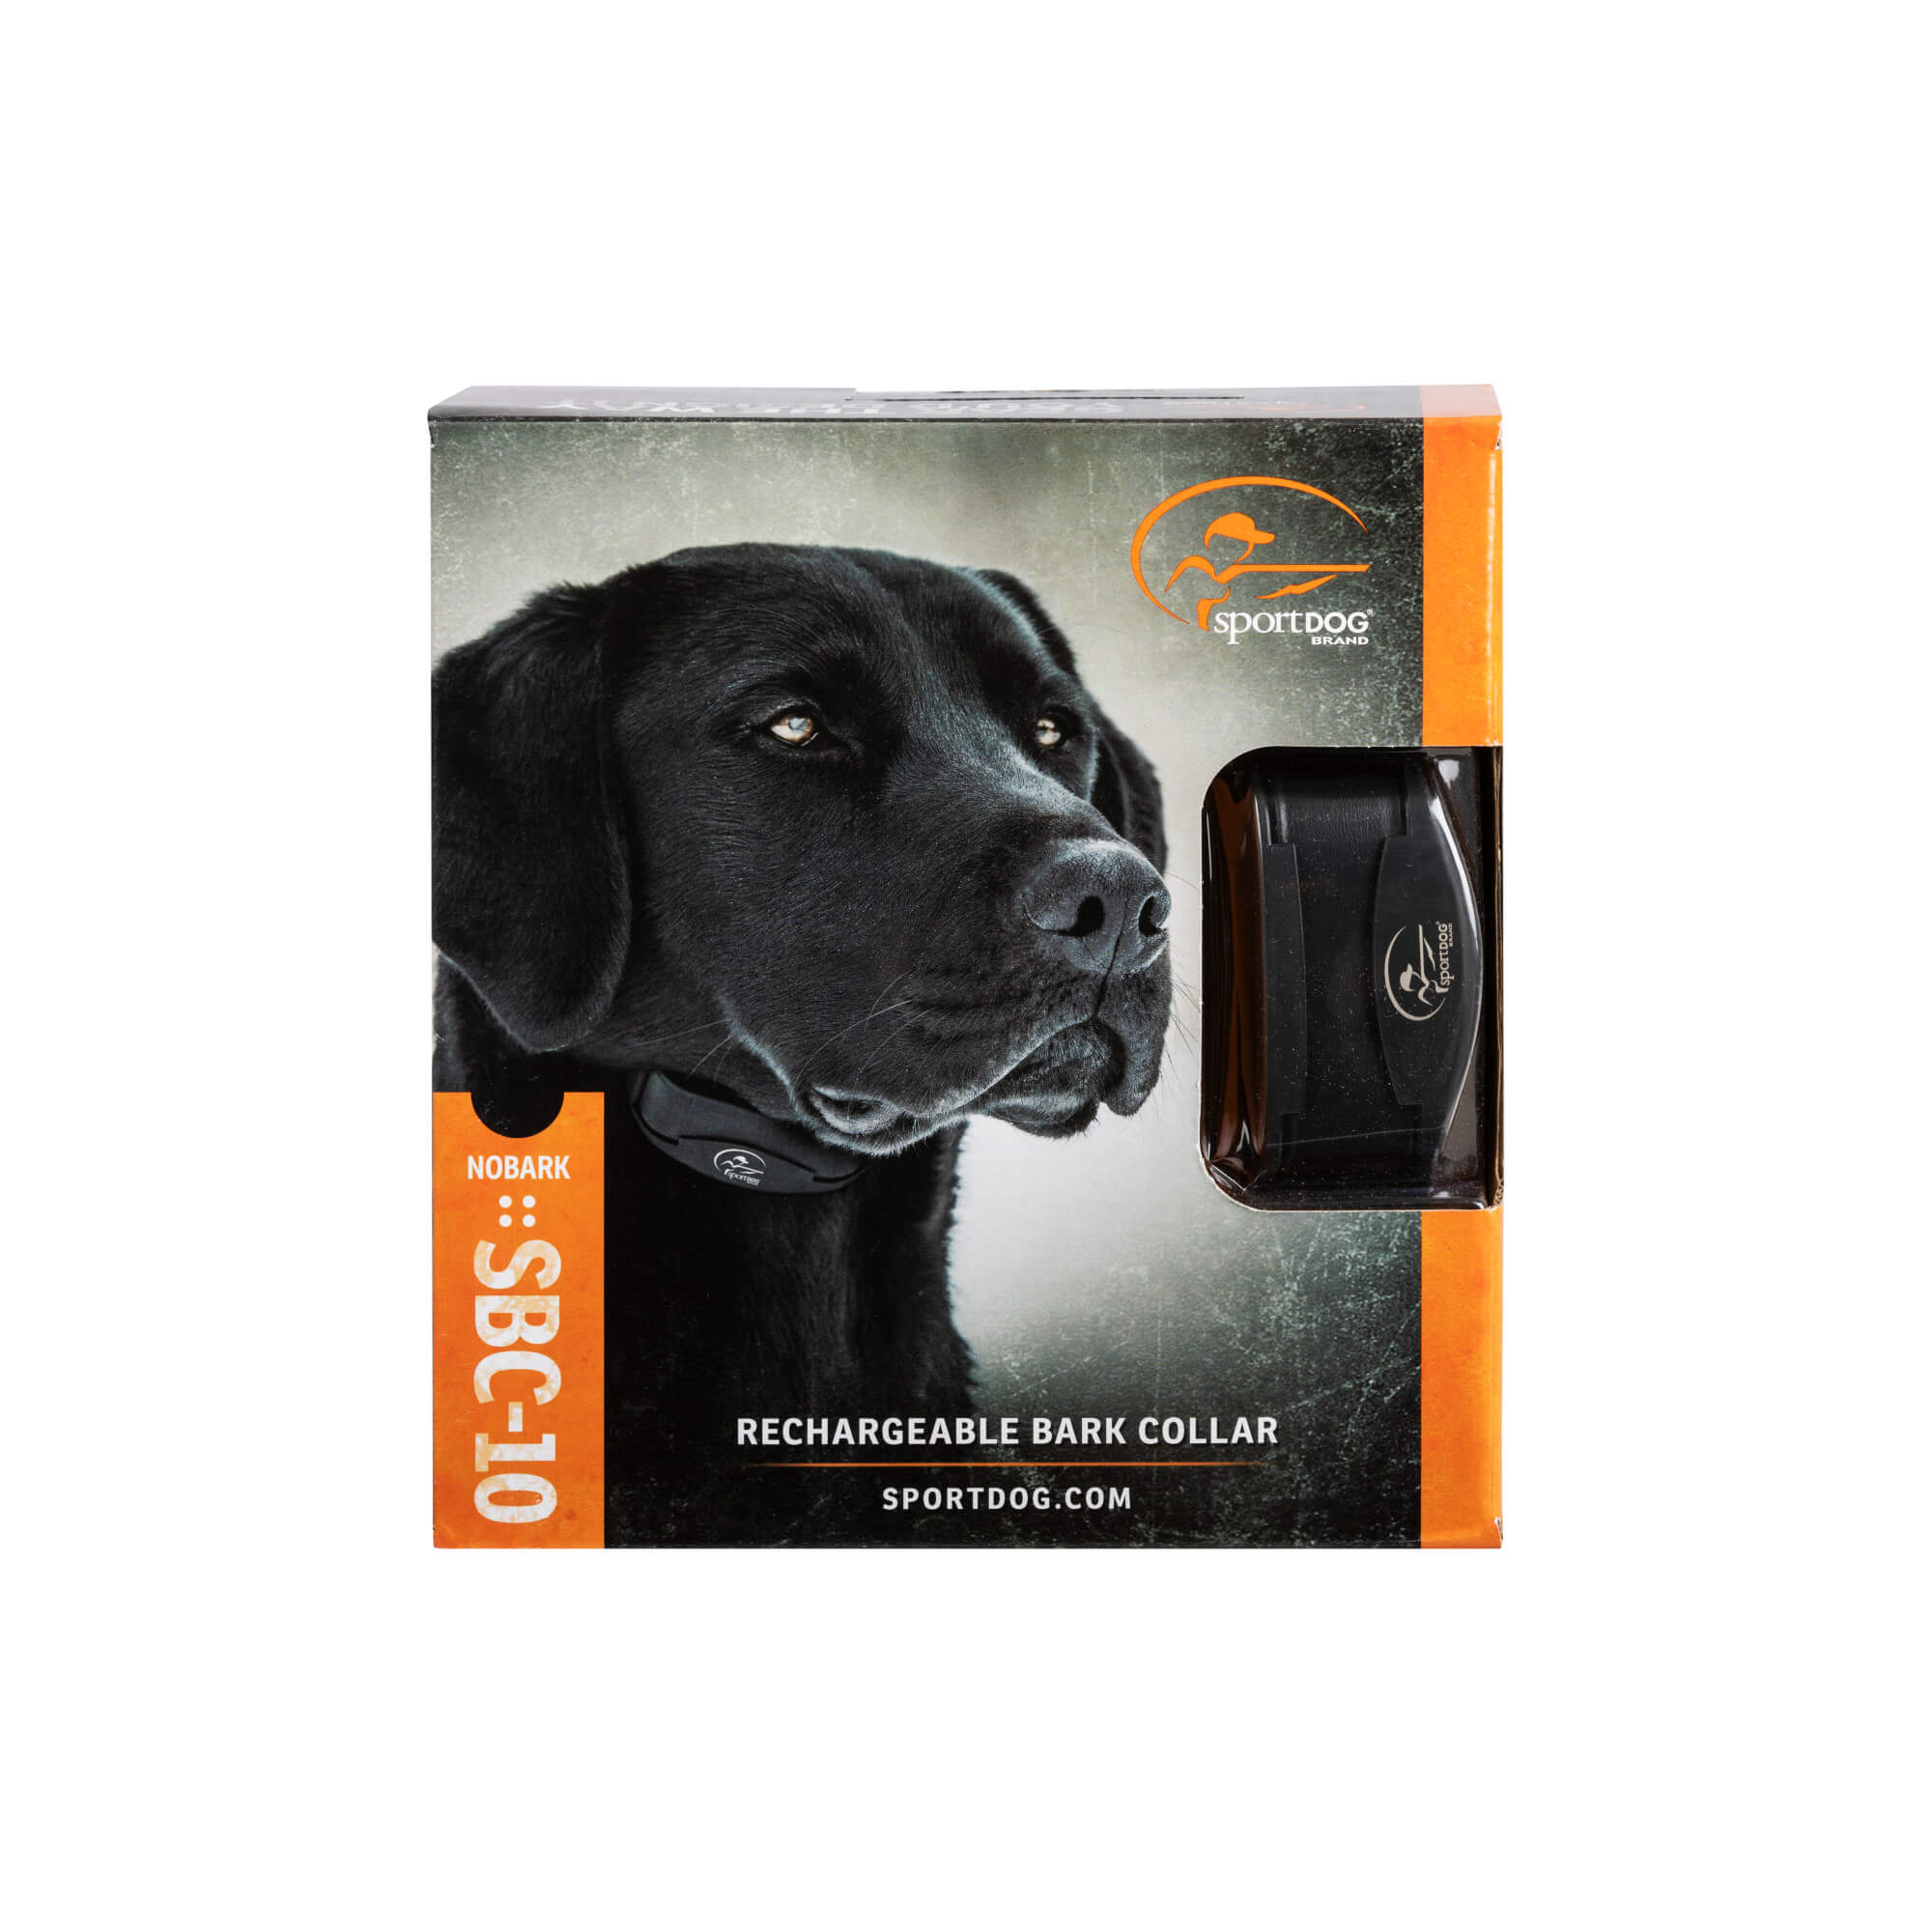 SportDog no bark dog Collar SBC-10 packaging